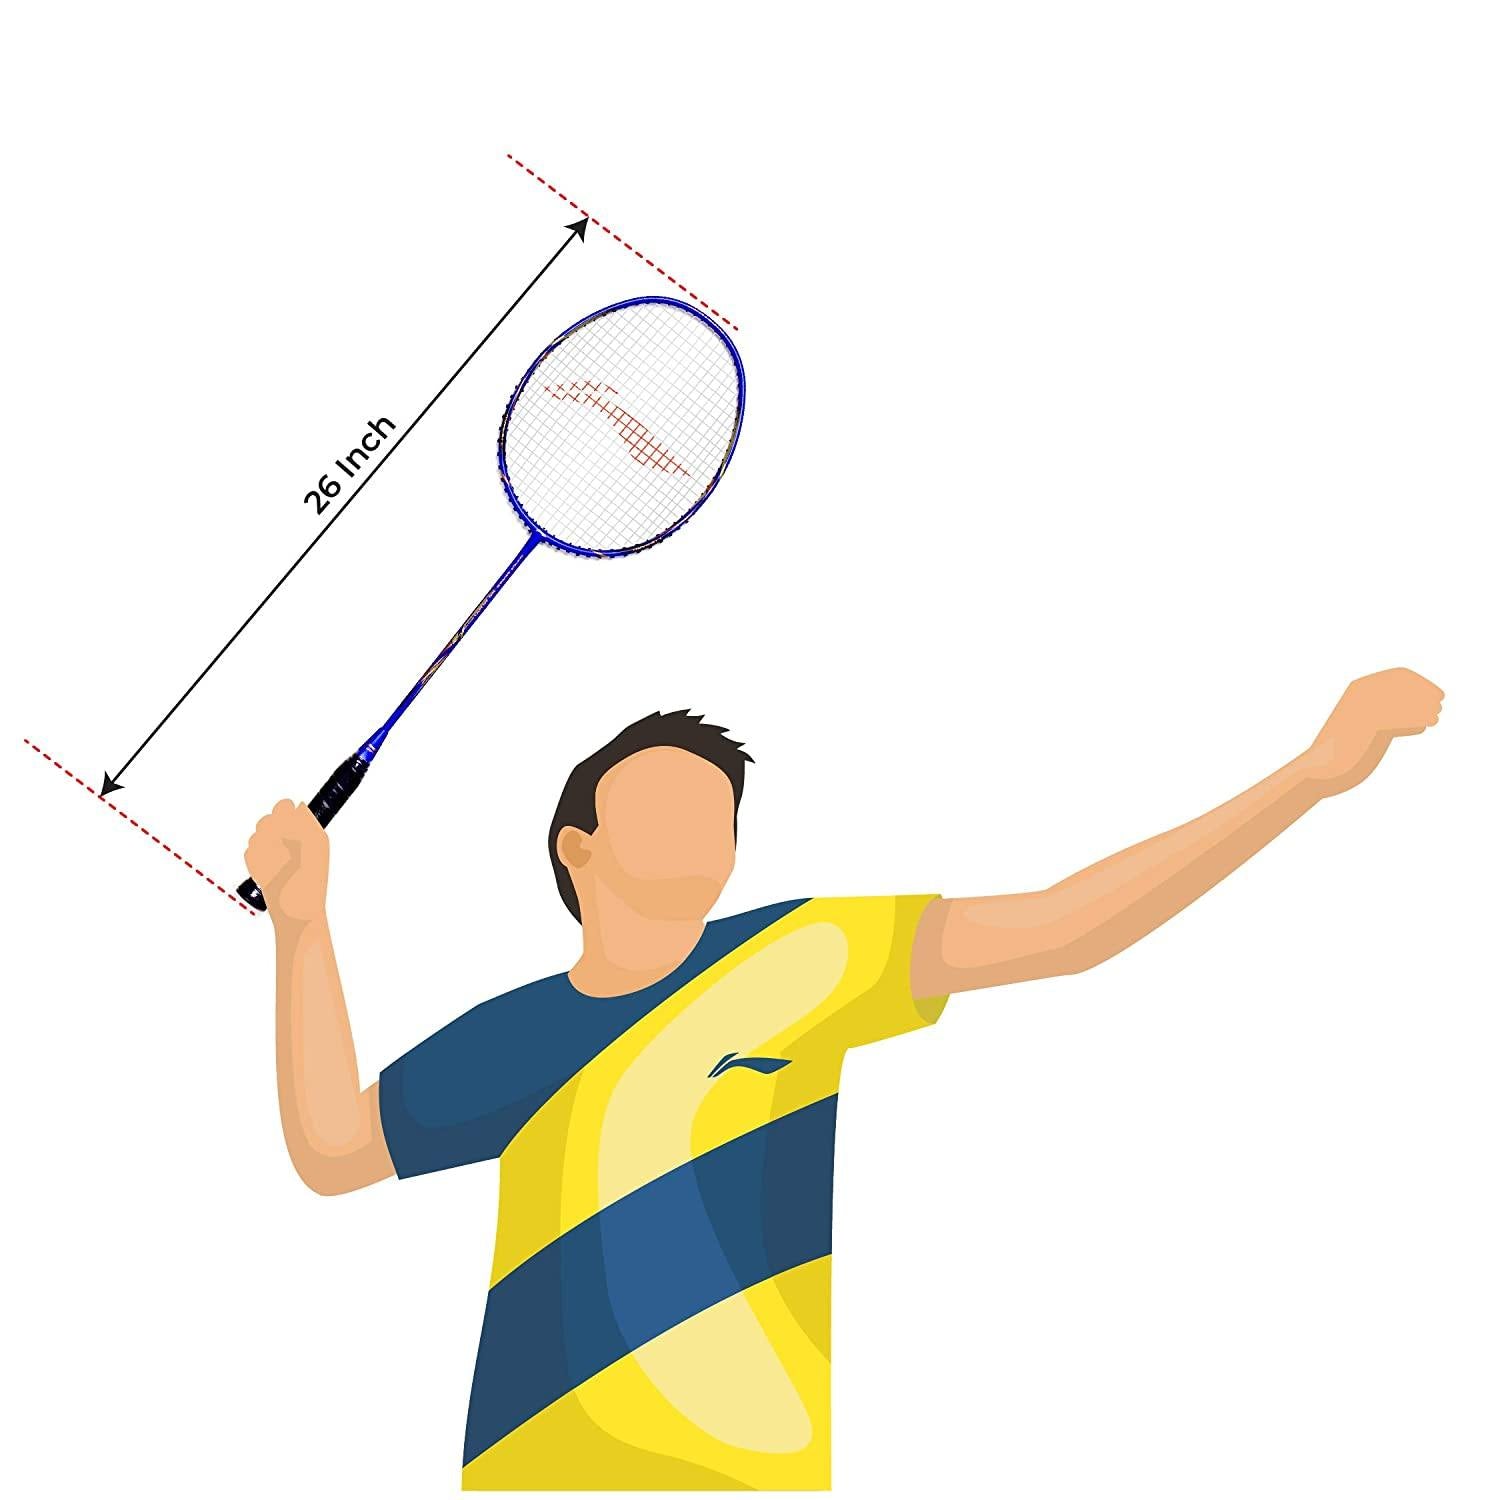 Li-Ning Super Series 2020 - (Strung) Graphite Badminton Racquet - Blue/Gold - Best Price online Prokicksports.com